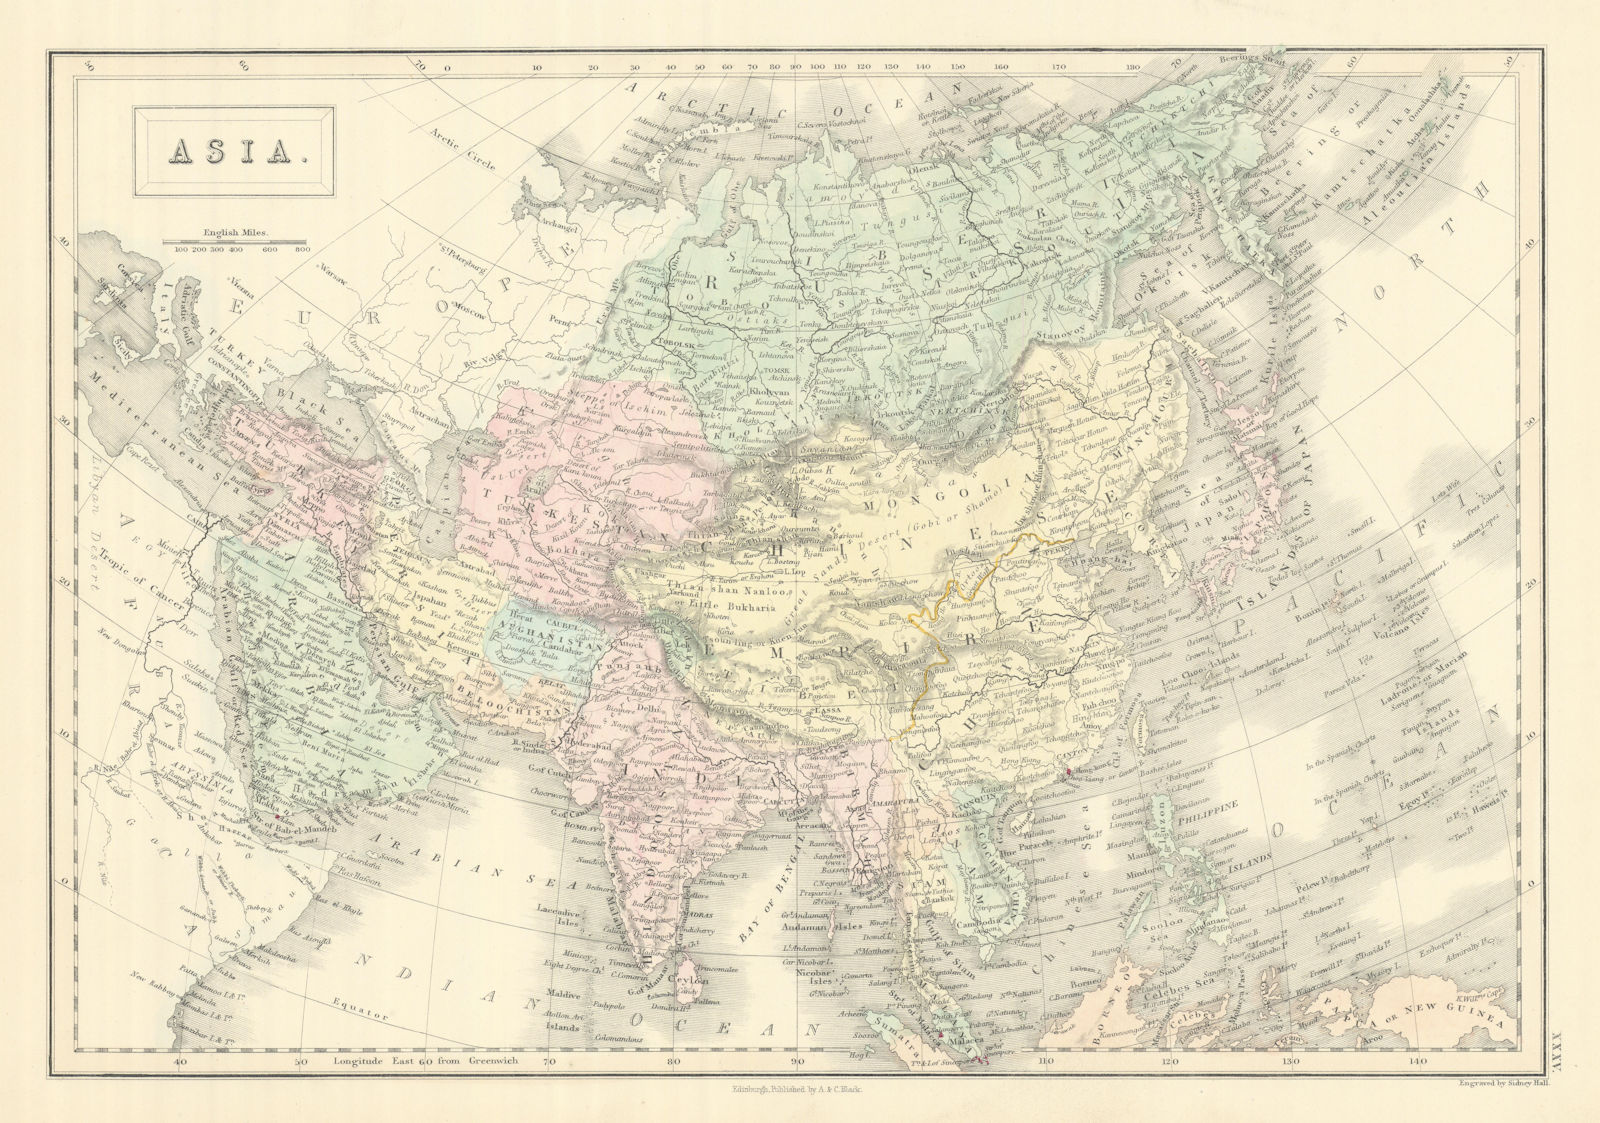 Asia by SIDNEY HALL. Siam Birmah Cochin China Niphon Persia Arabia 1854 map